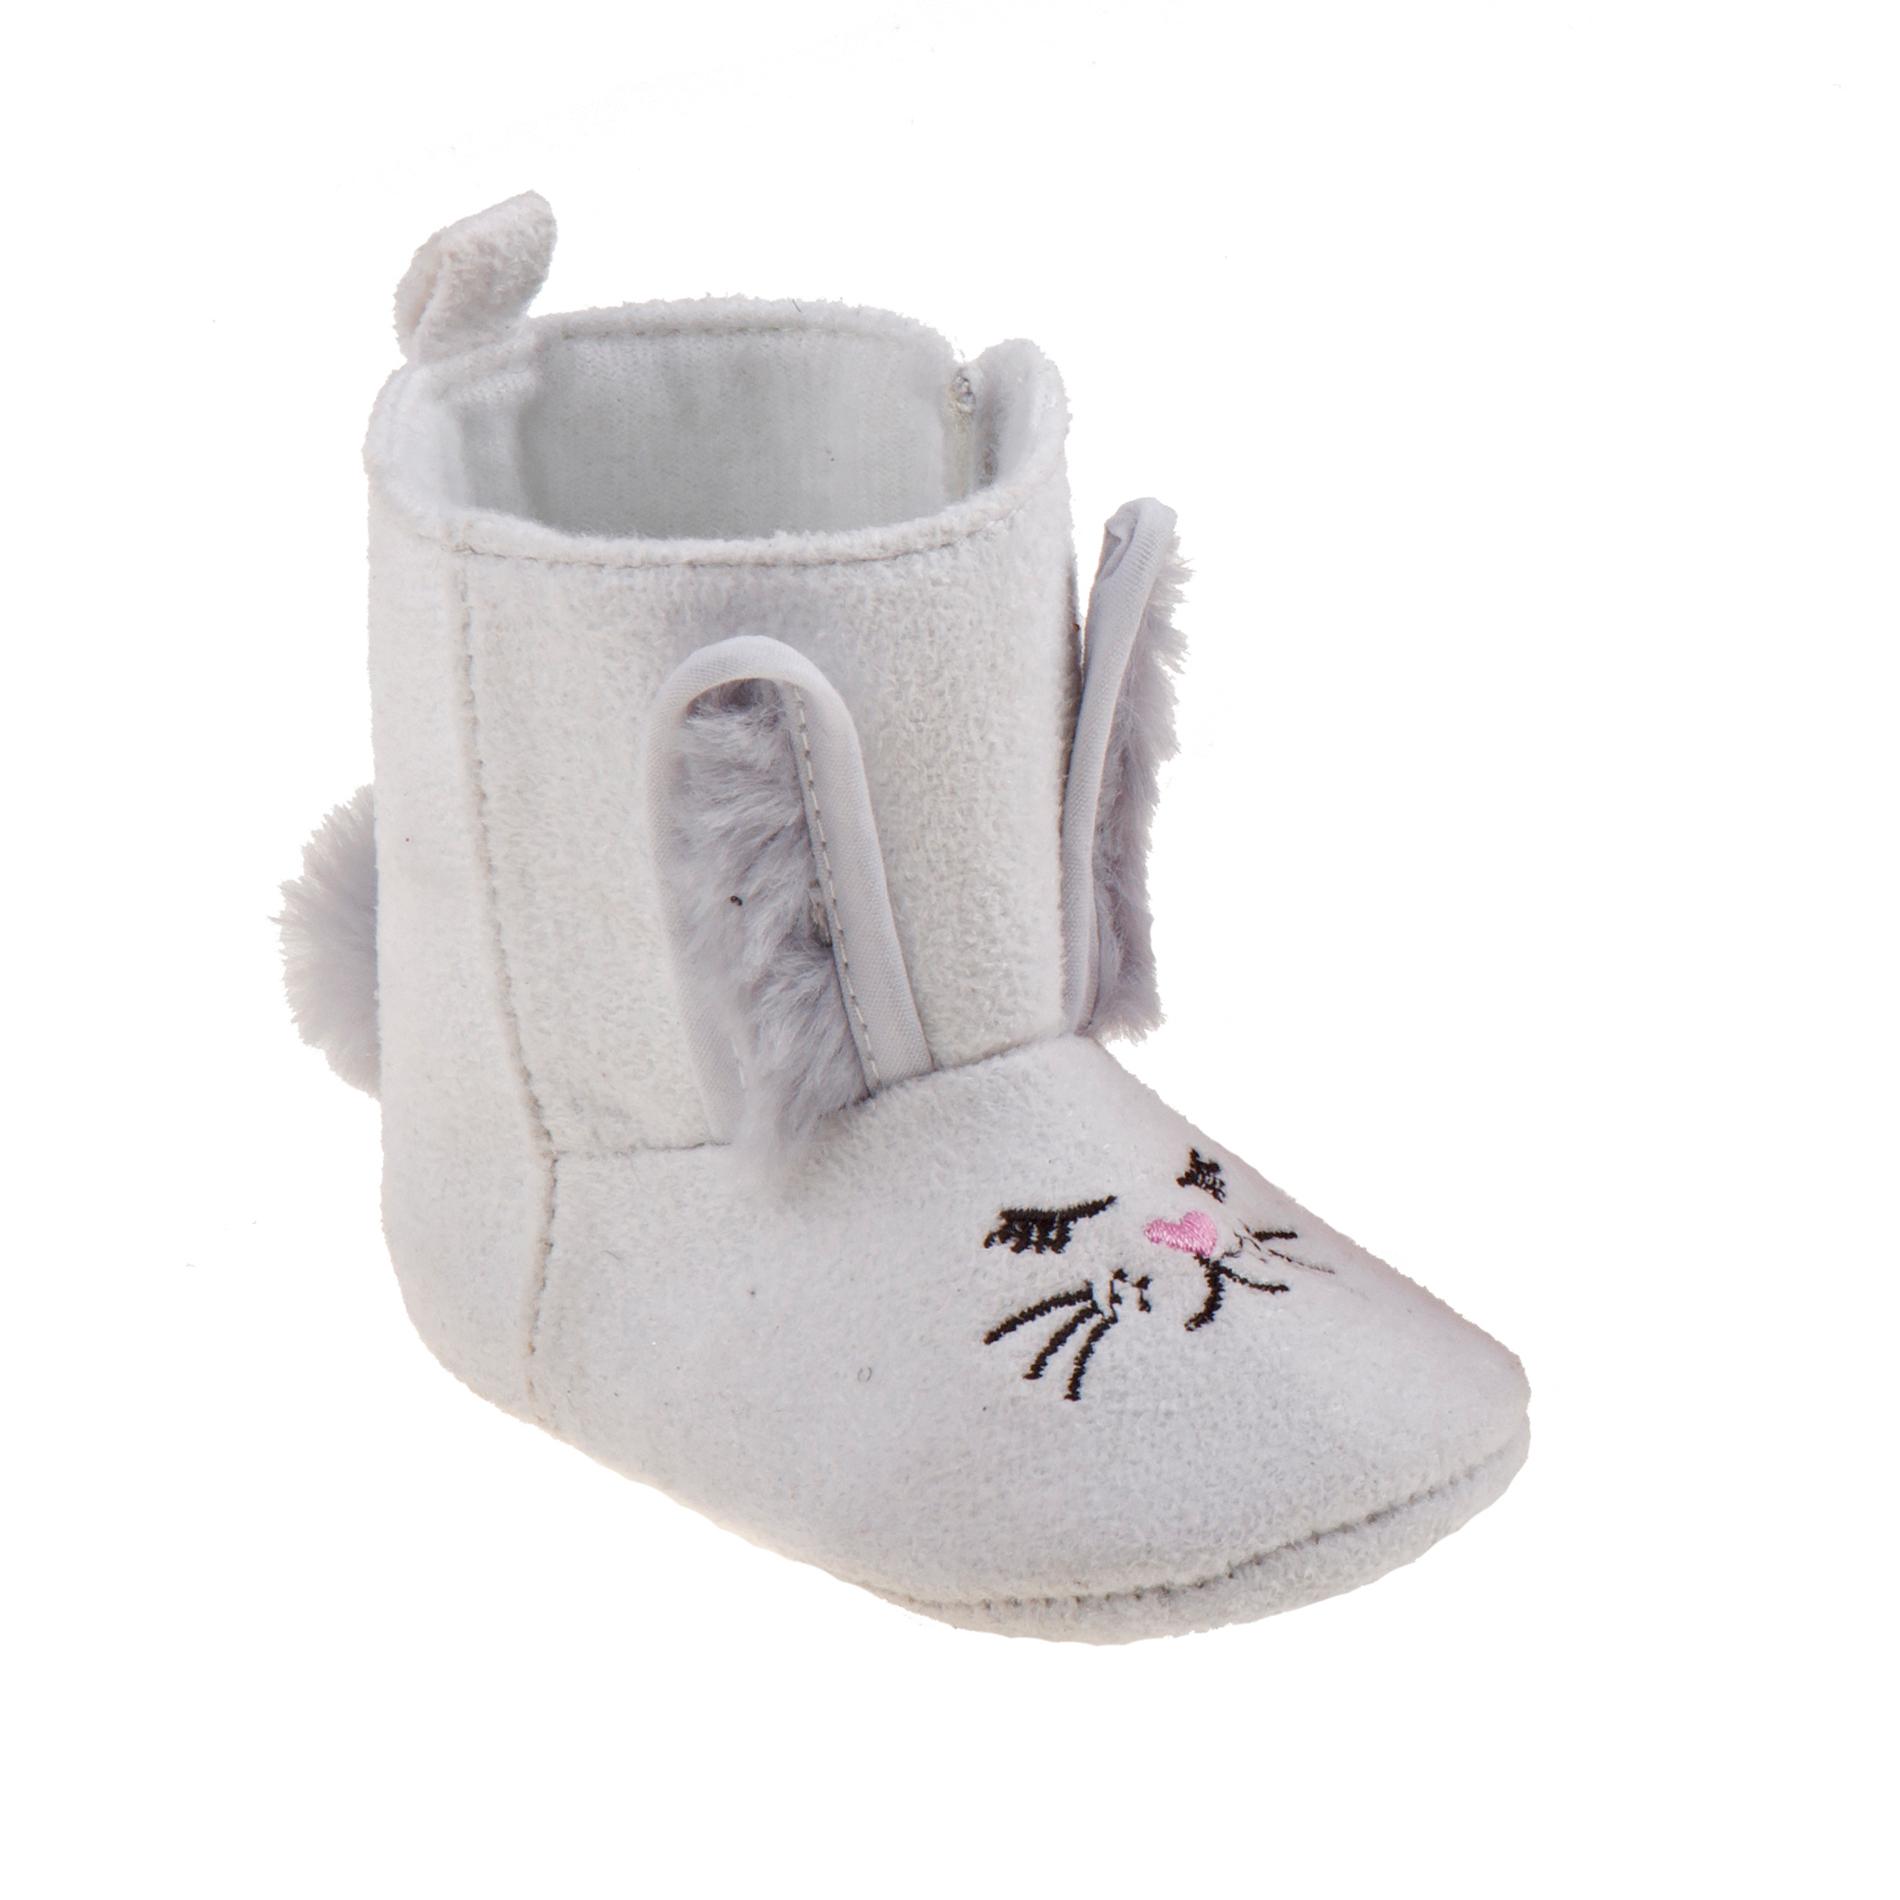 Laura Ashley Baby Girls' Fashion Boot - White/Bunny